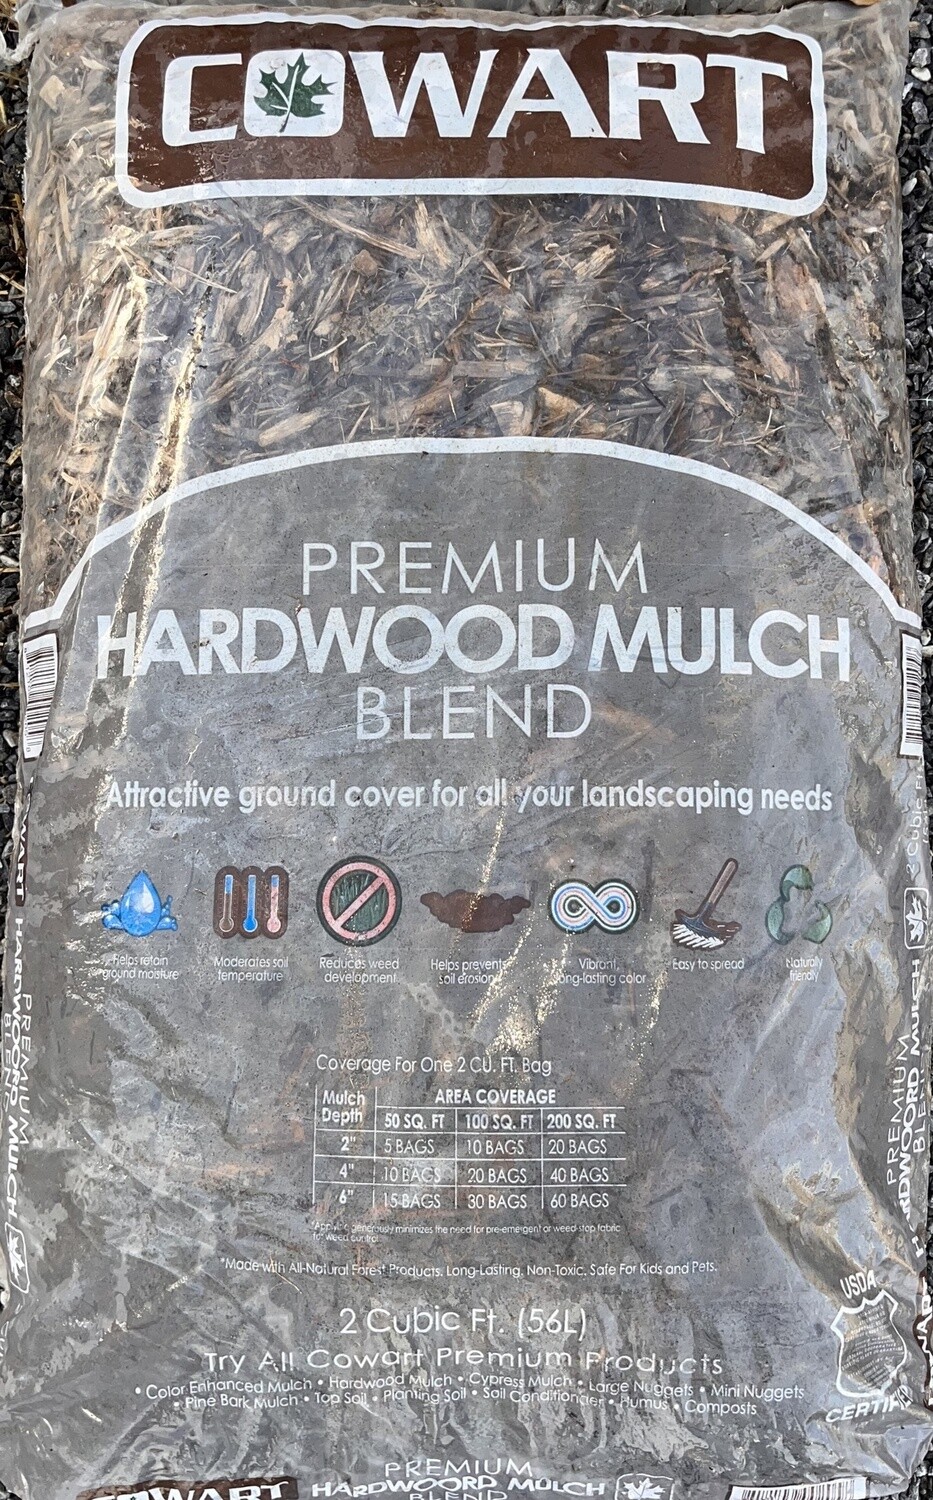 Bagged Hardwood Blend Mulch